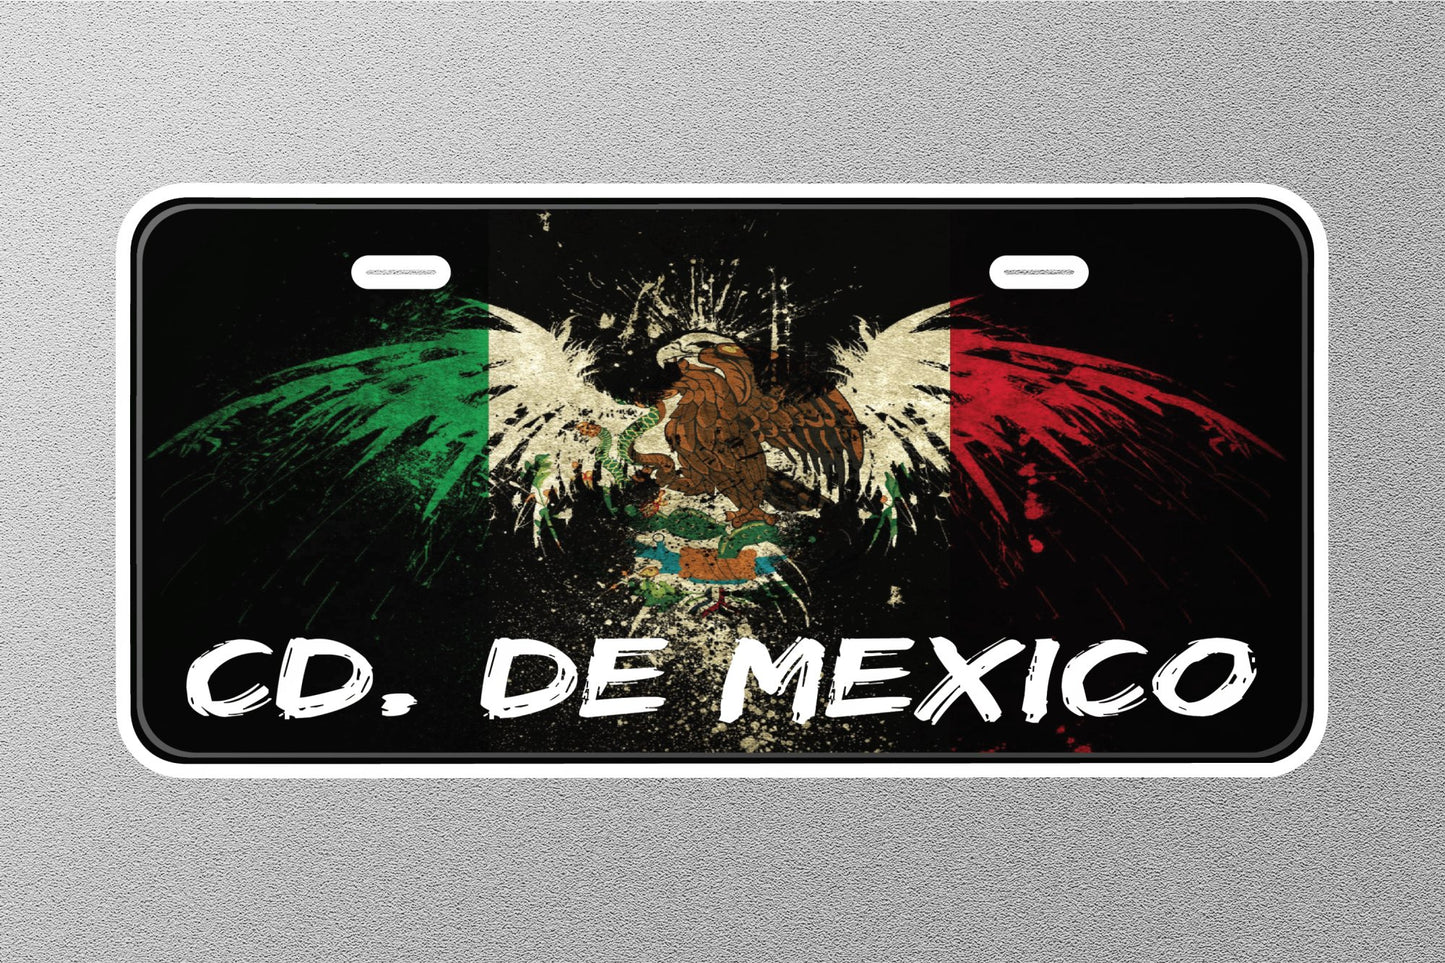 CD. DE Mexico Licence Plate Sticker